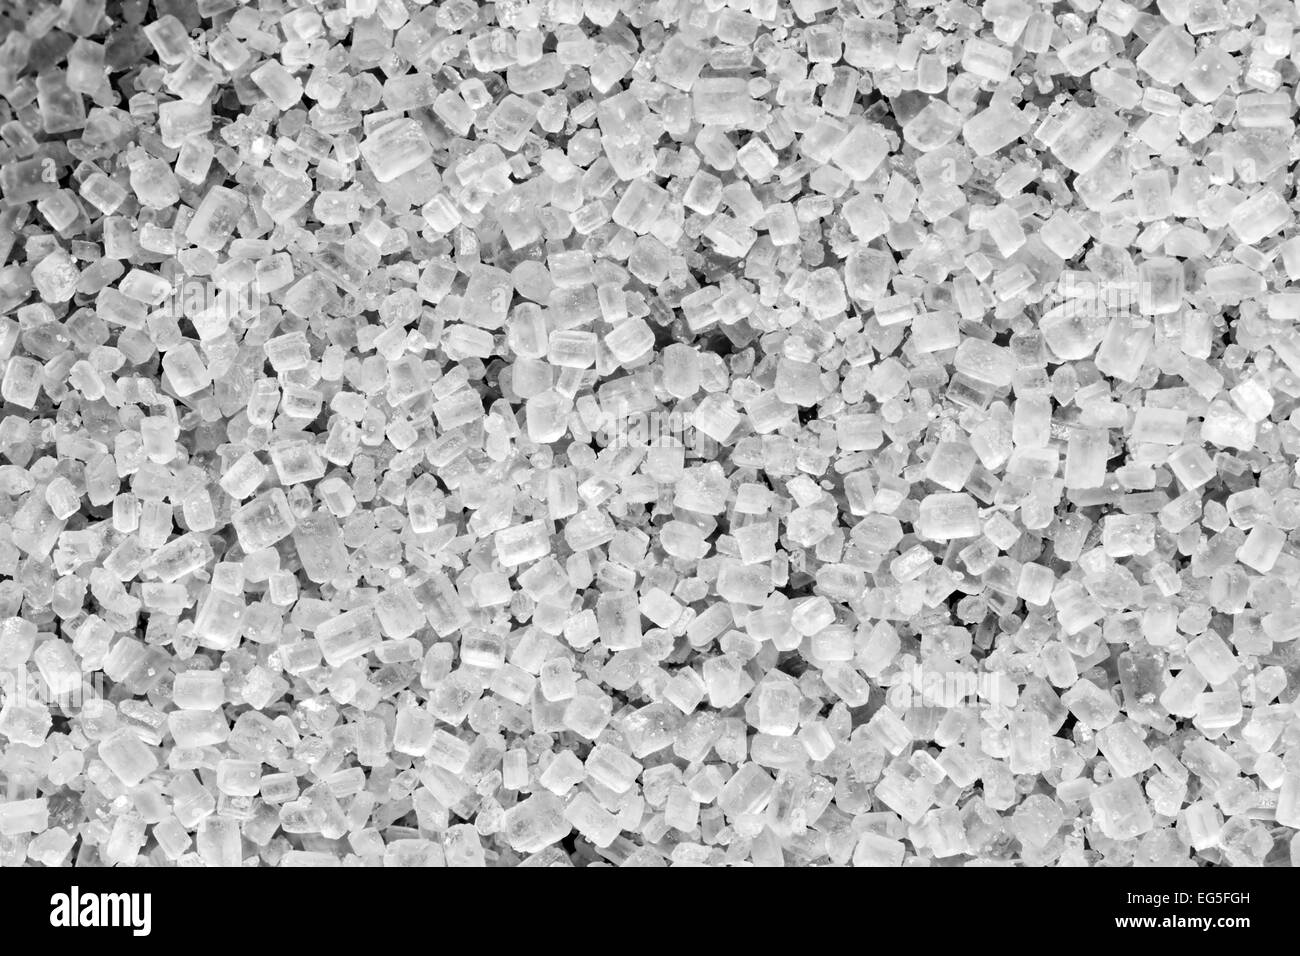 White sugar top view background. A close-up, macro shot. Stock Photo